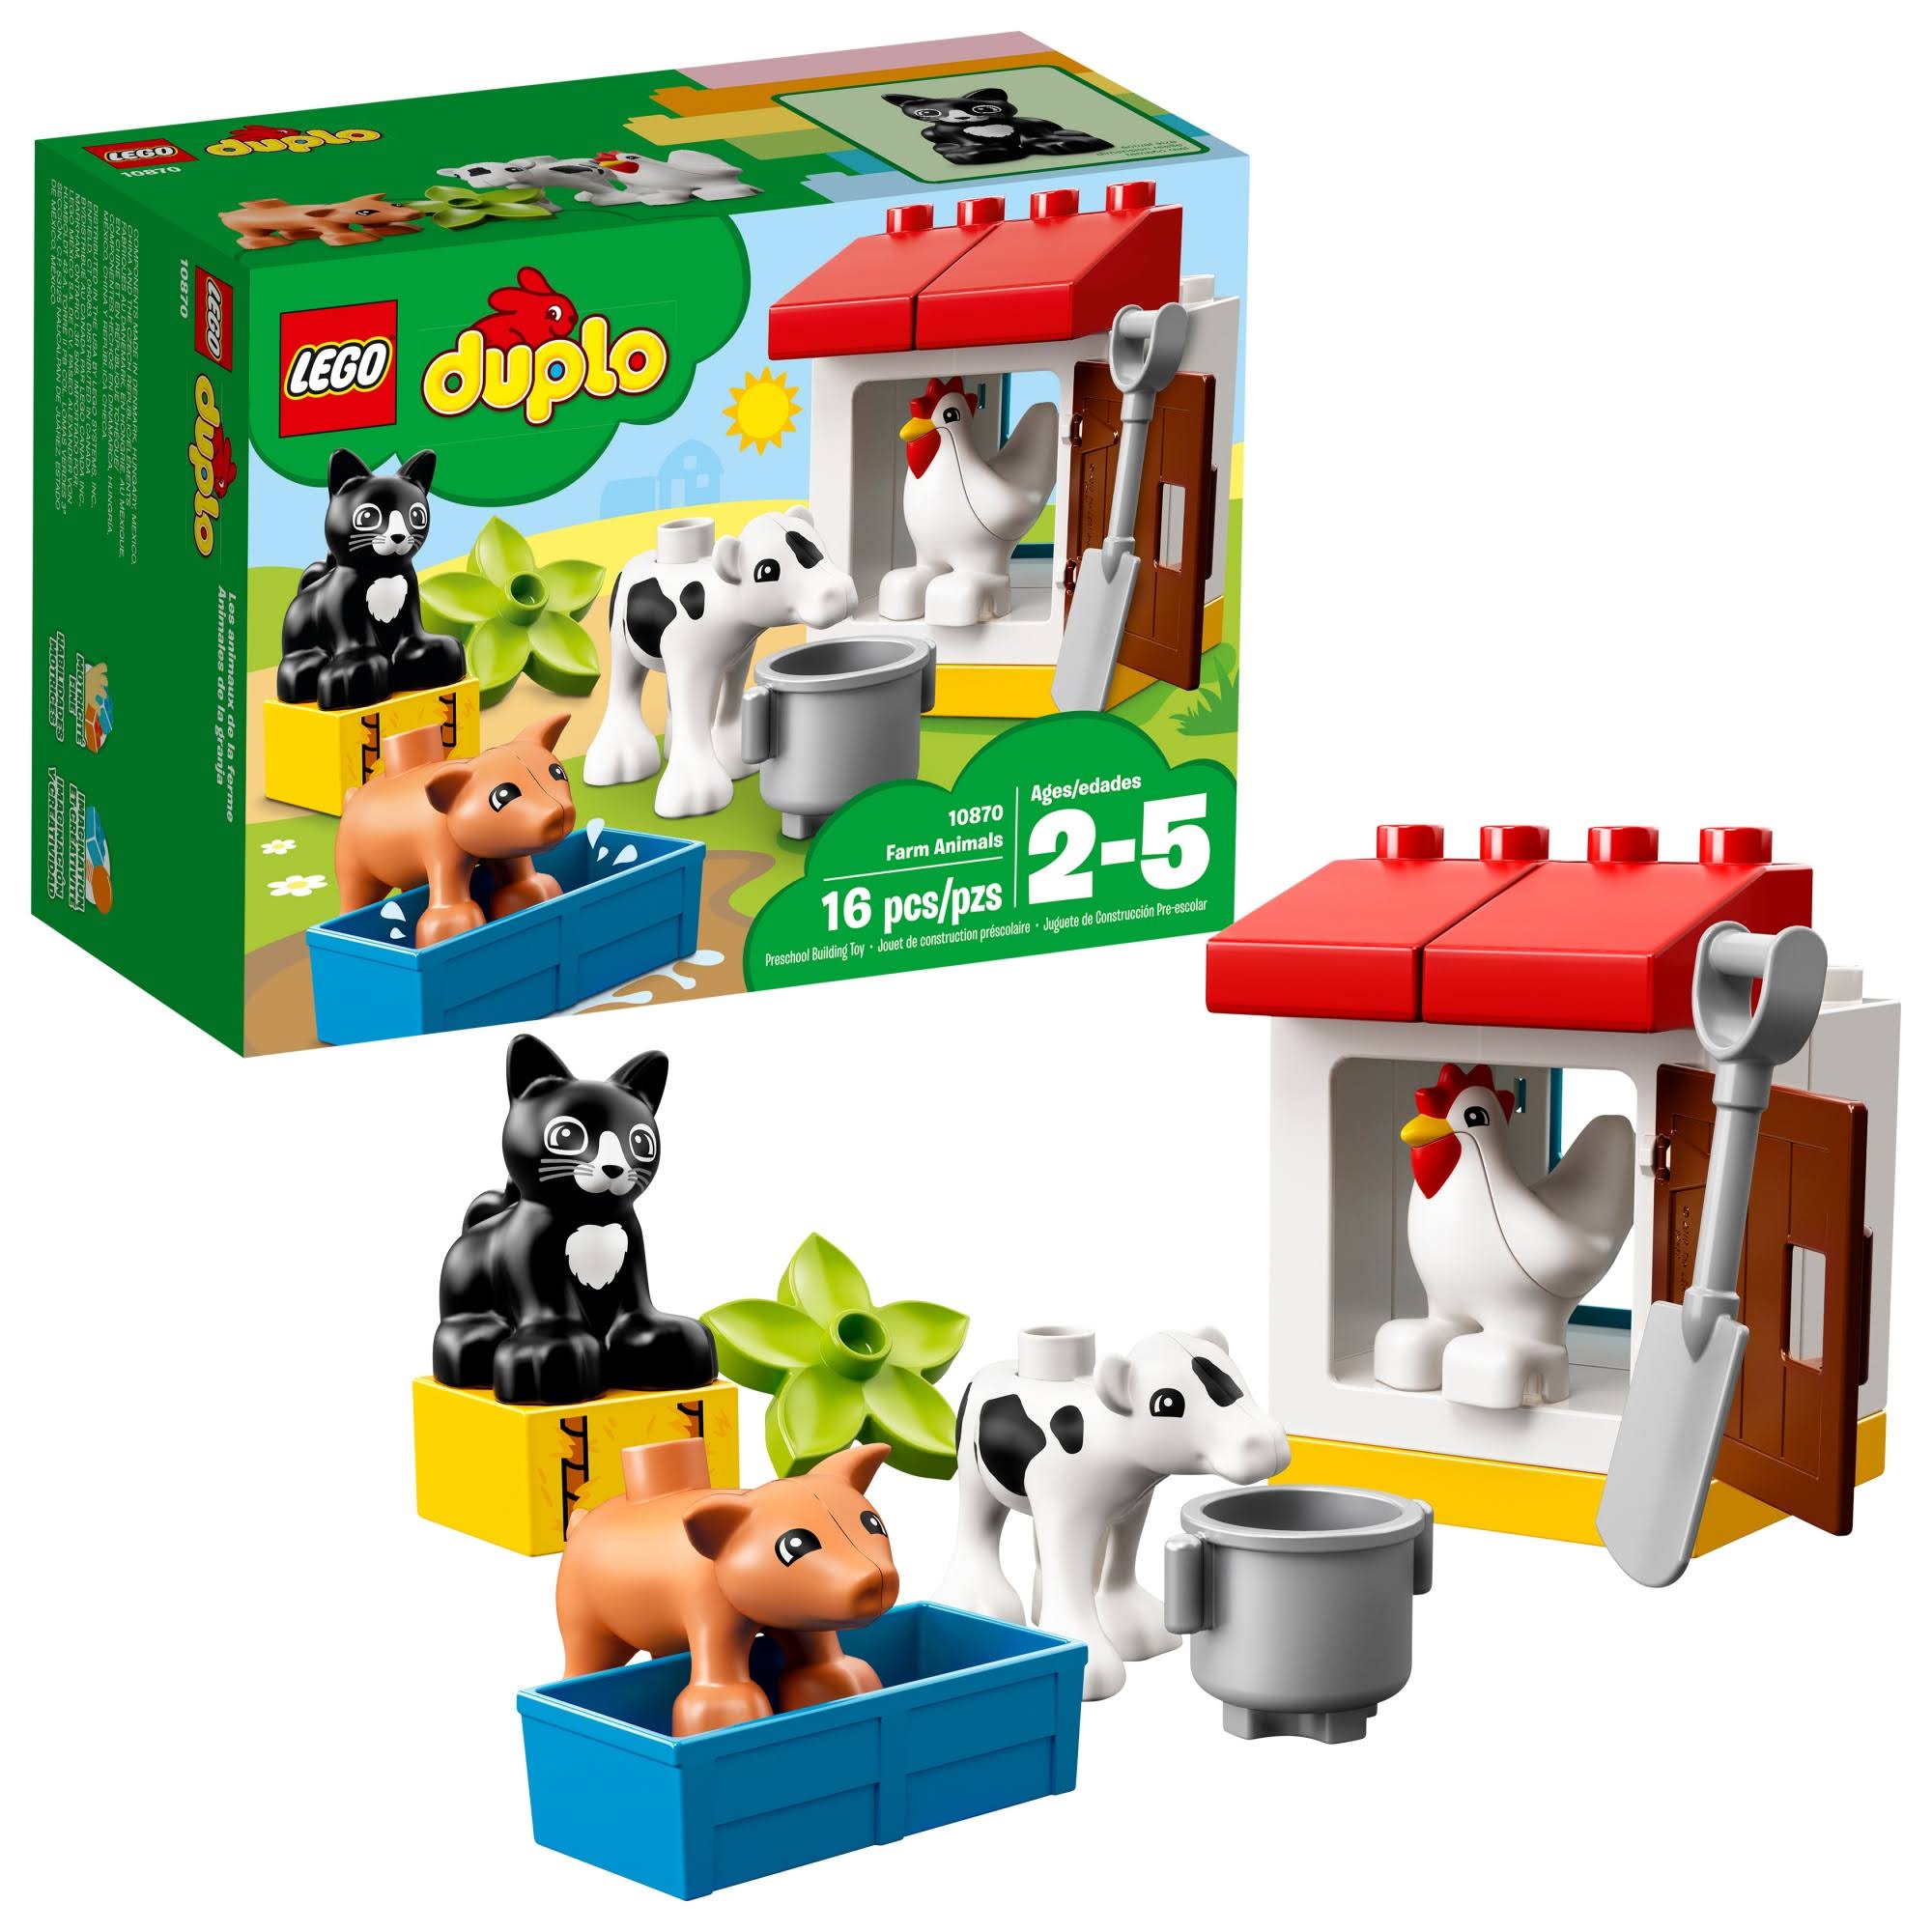 Lego 10870 Duplo Town Farm Animals Building Toy